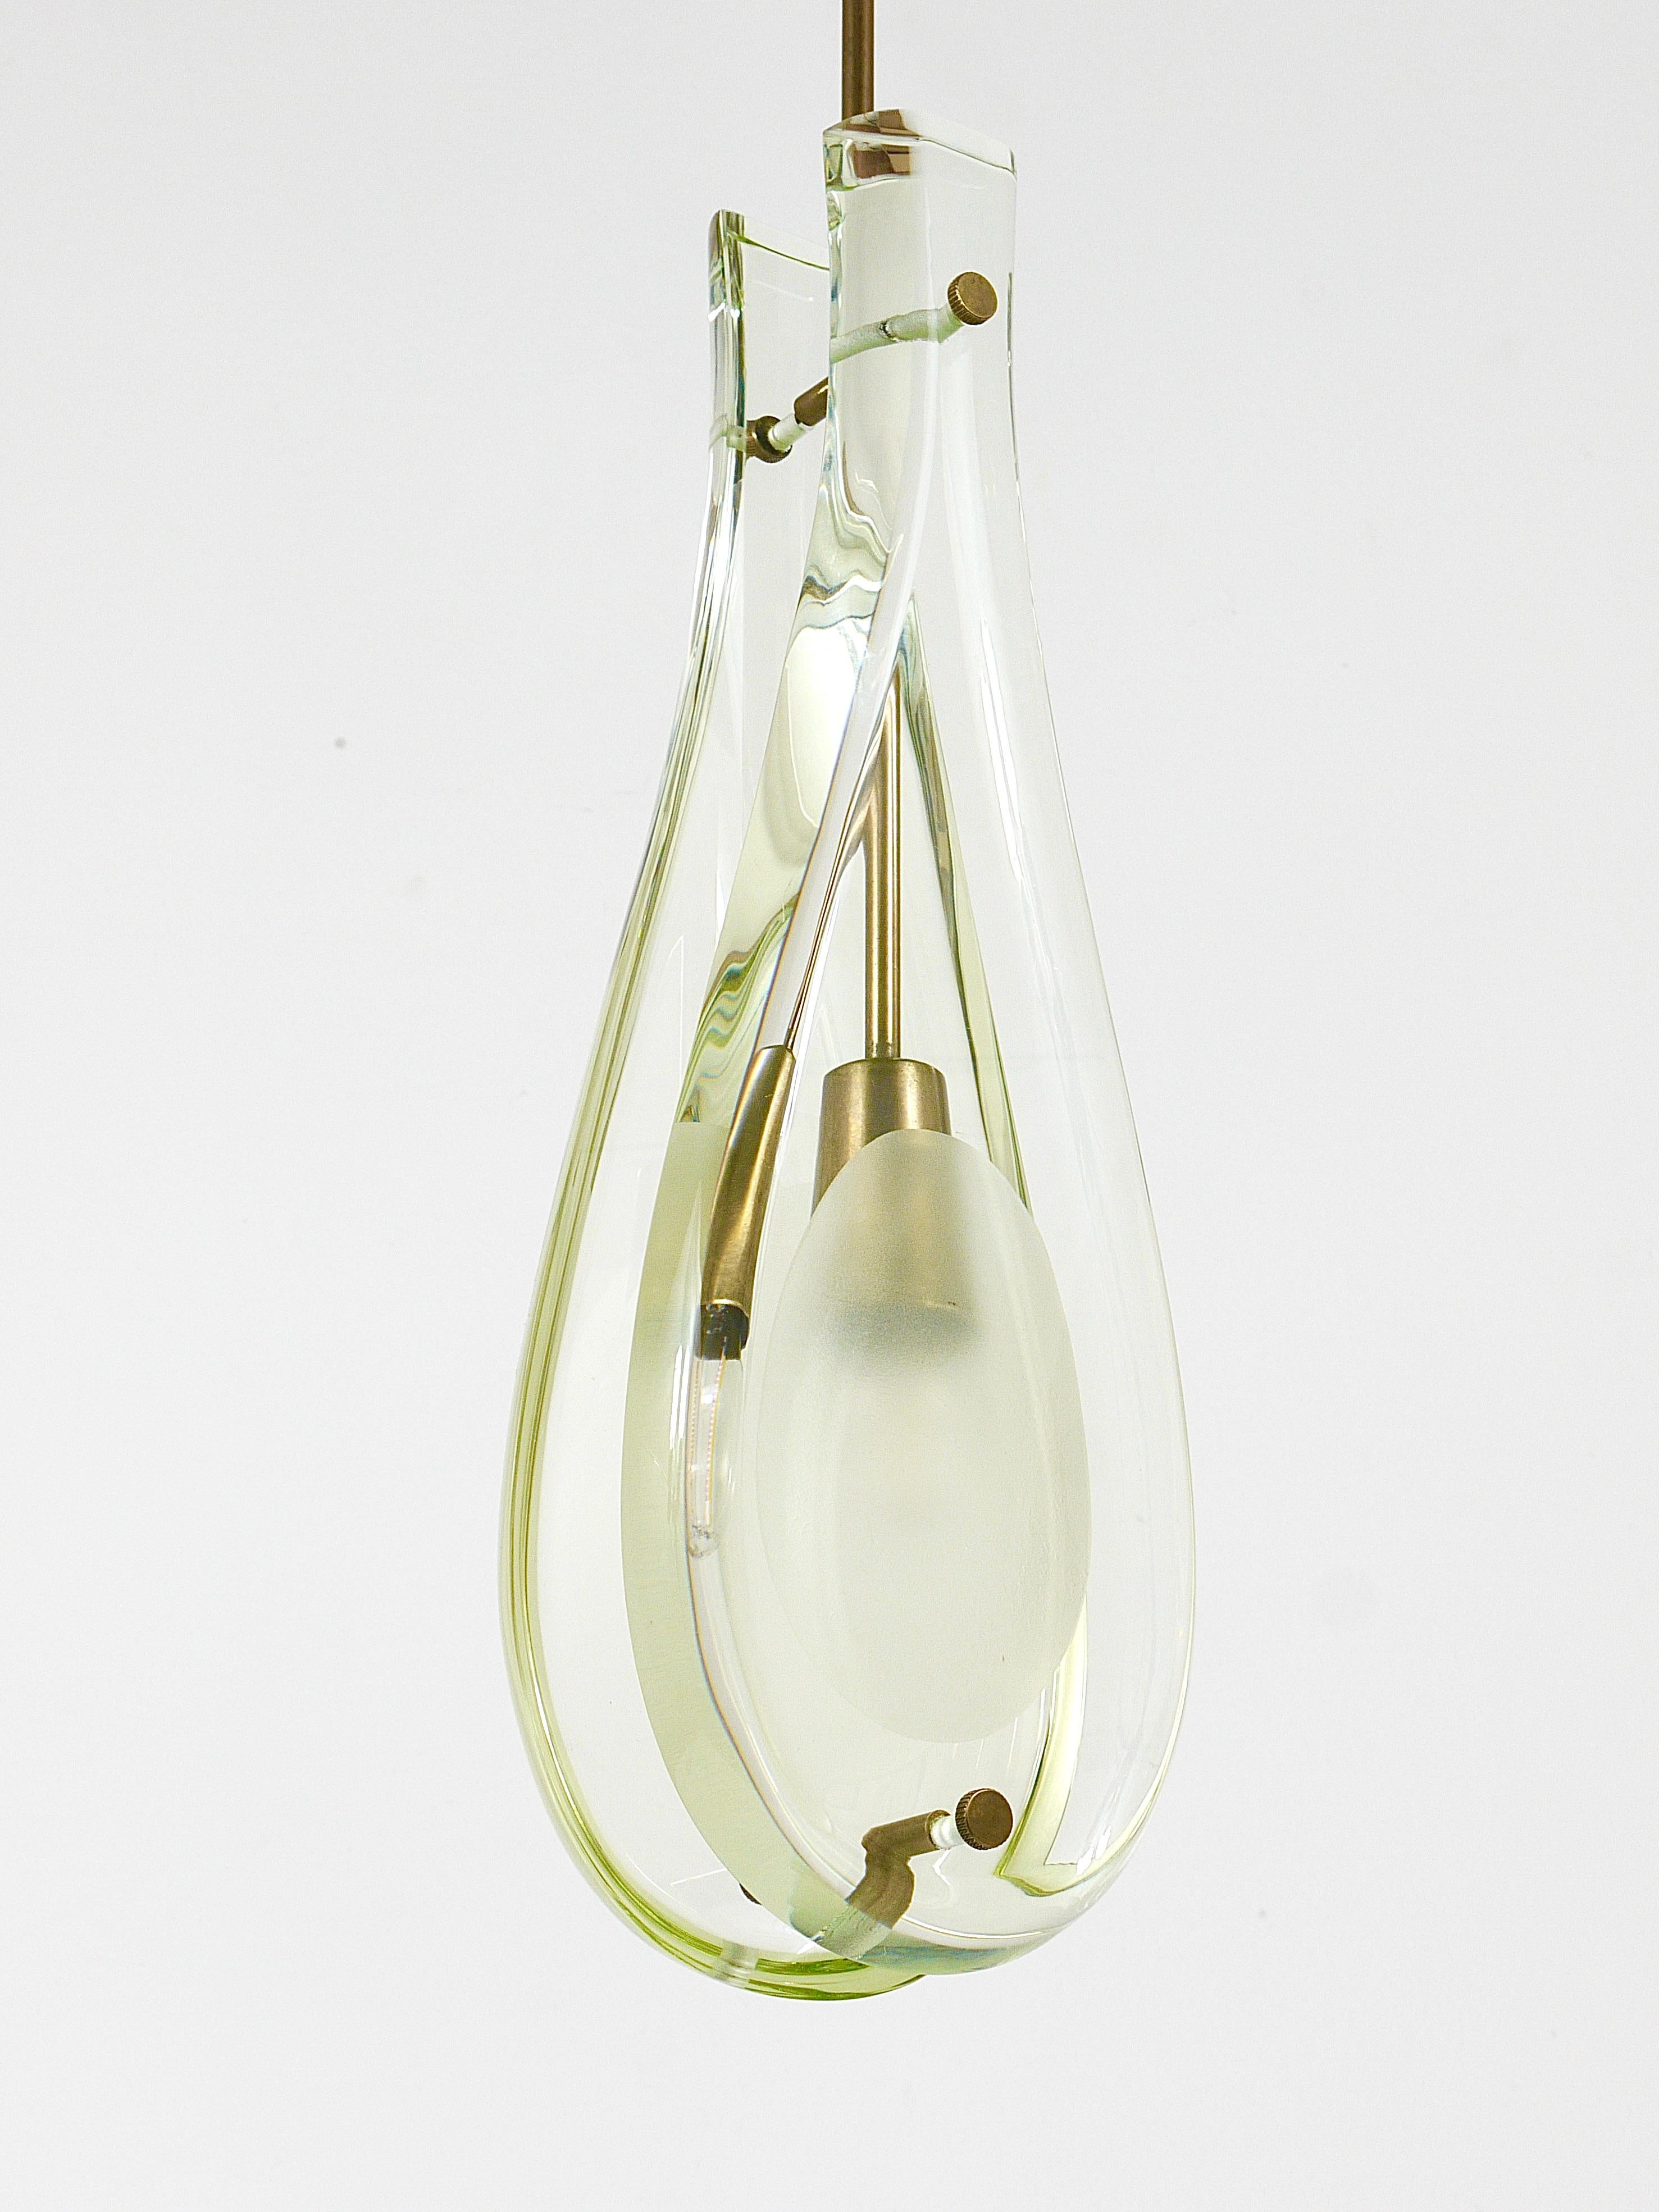 Max Ingrad For Fontana Arte Drop Pendant Lamp, Model 2259, Italy, 1960s For Sale 10